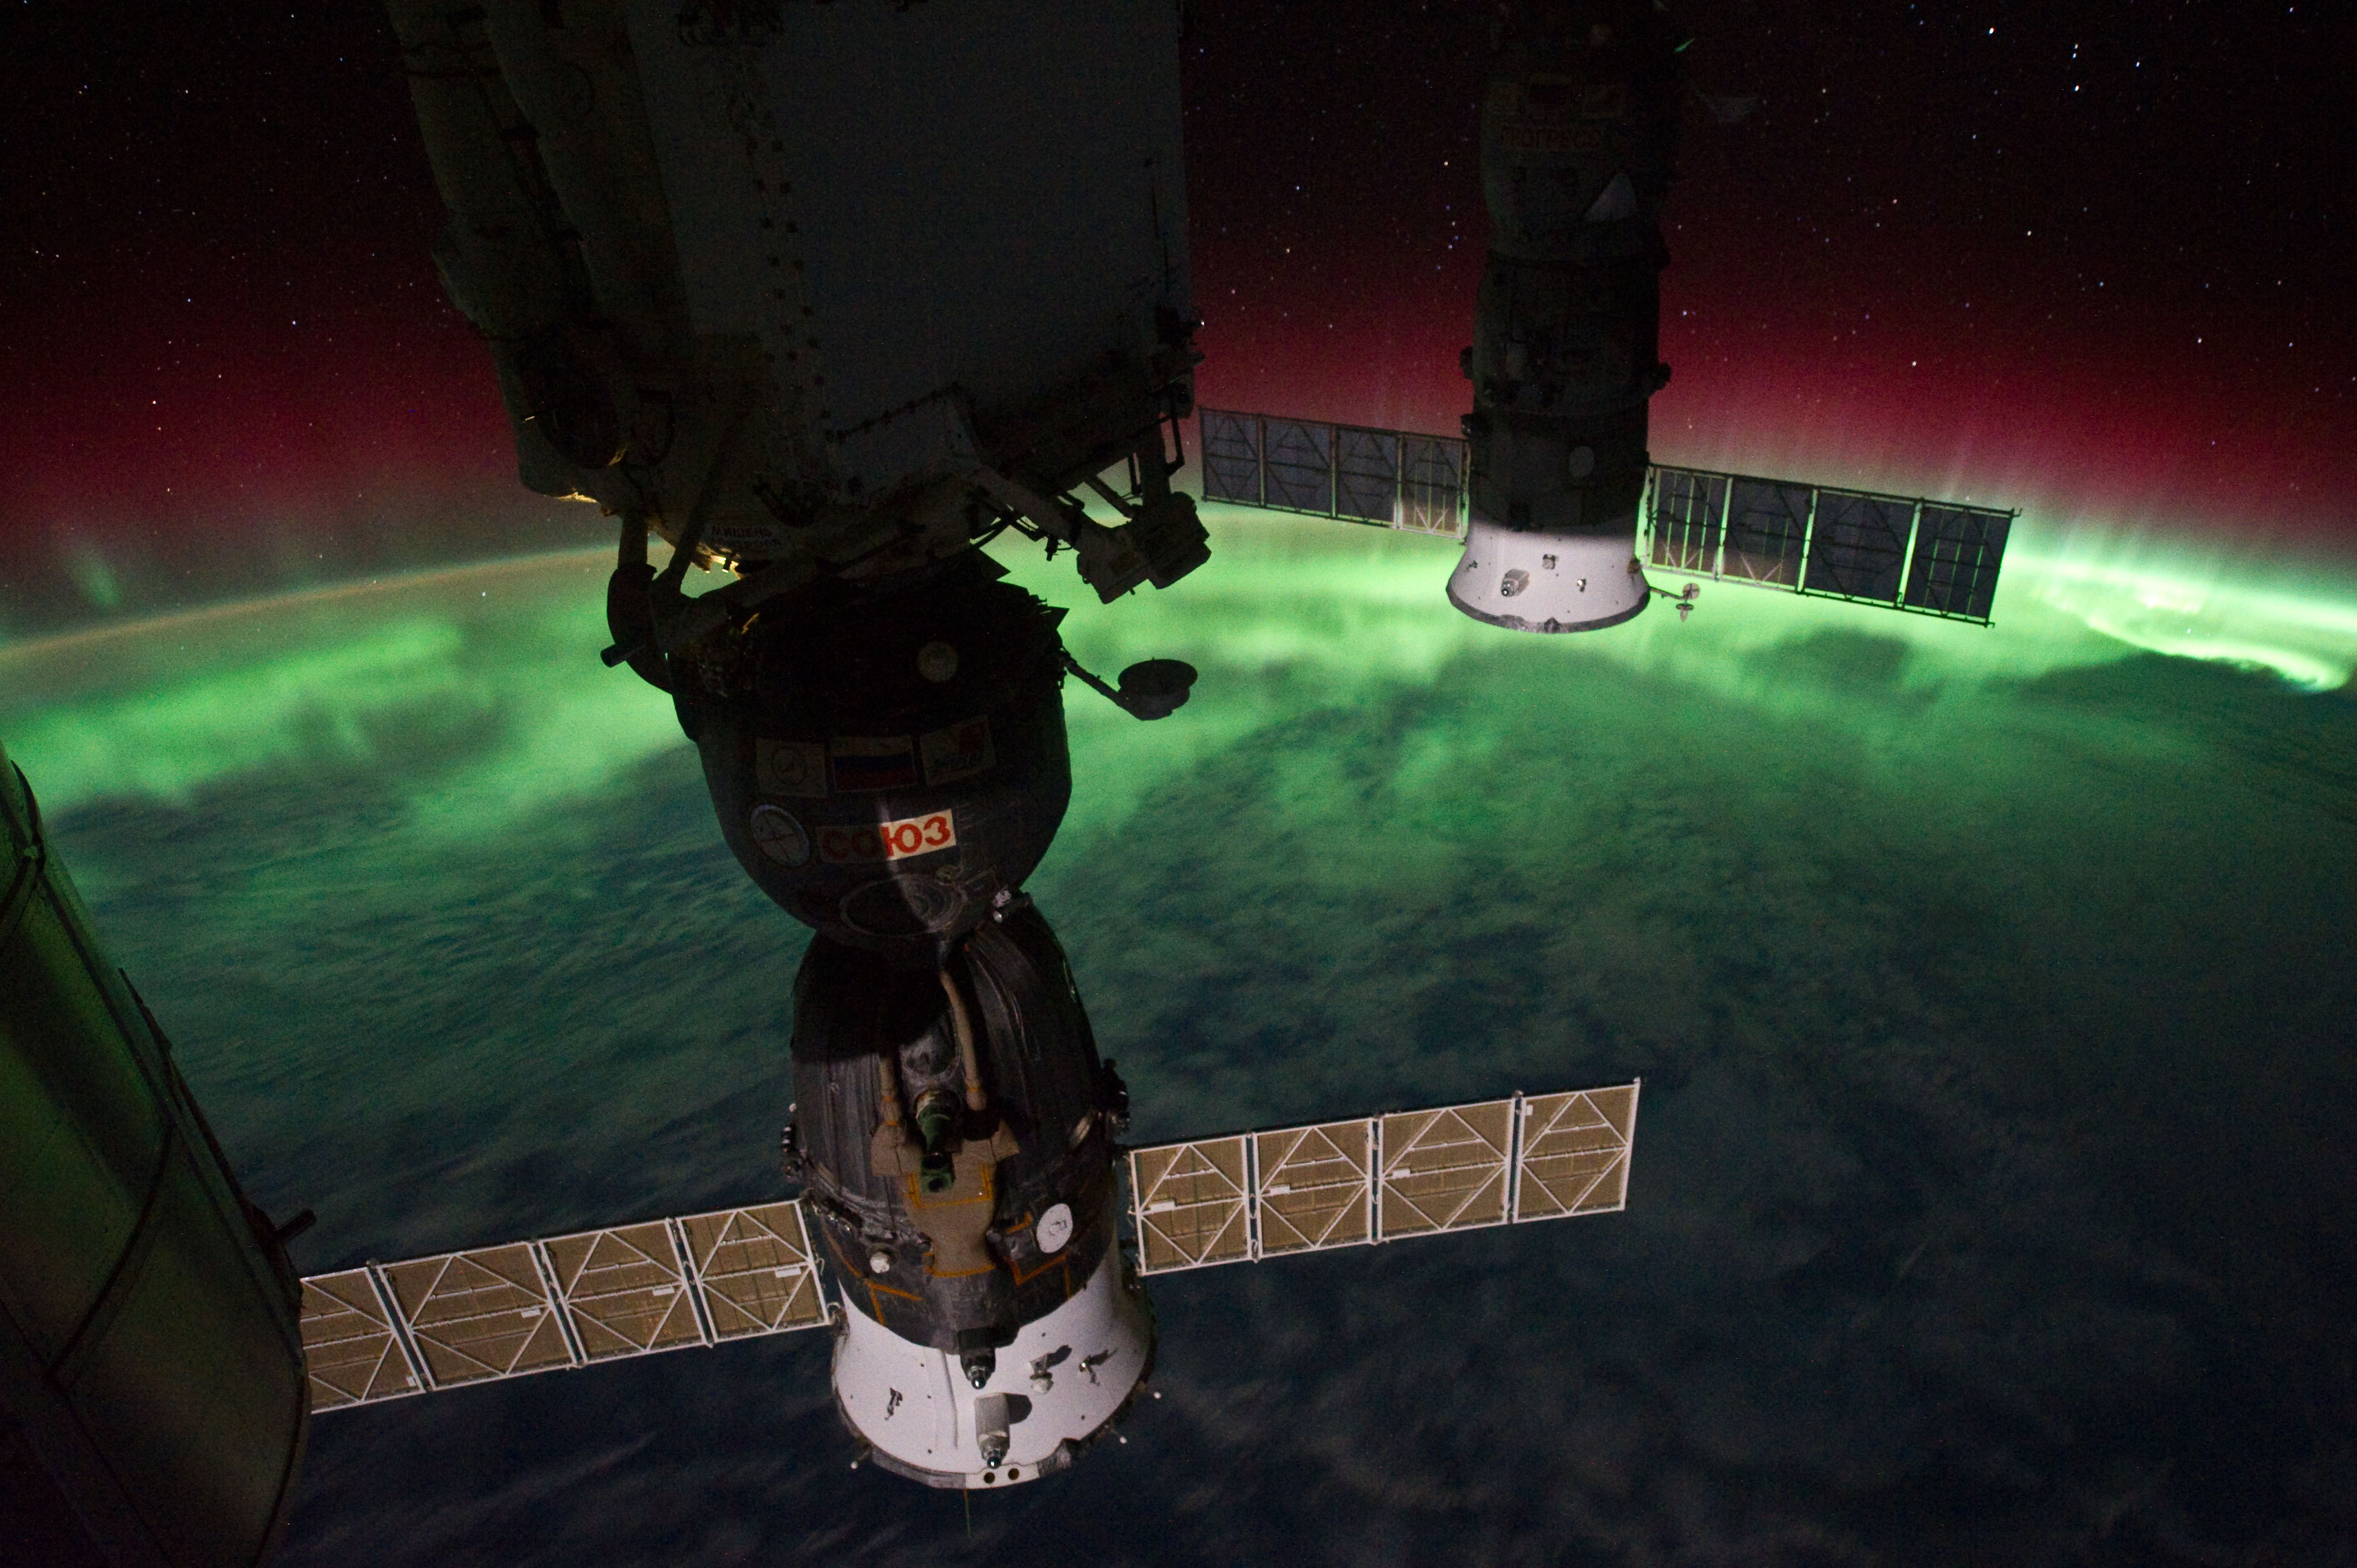 ISS-29 Soyuz TMA-02M and Progress M-10M against Aurora Australis